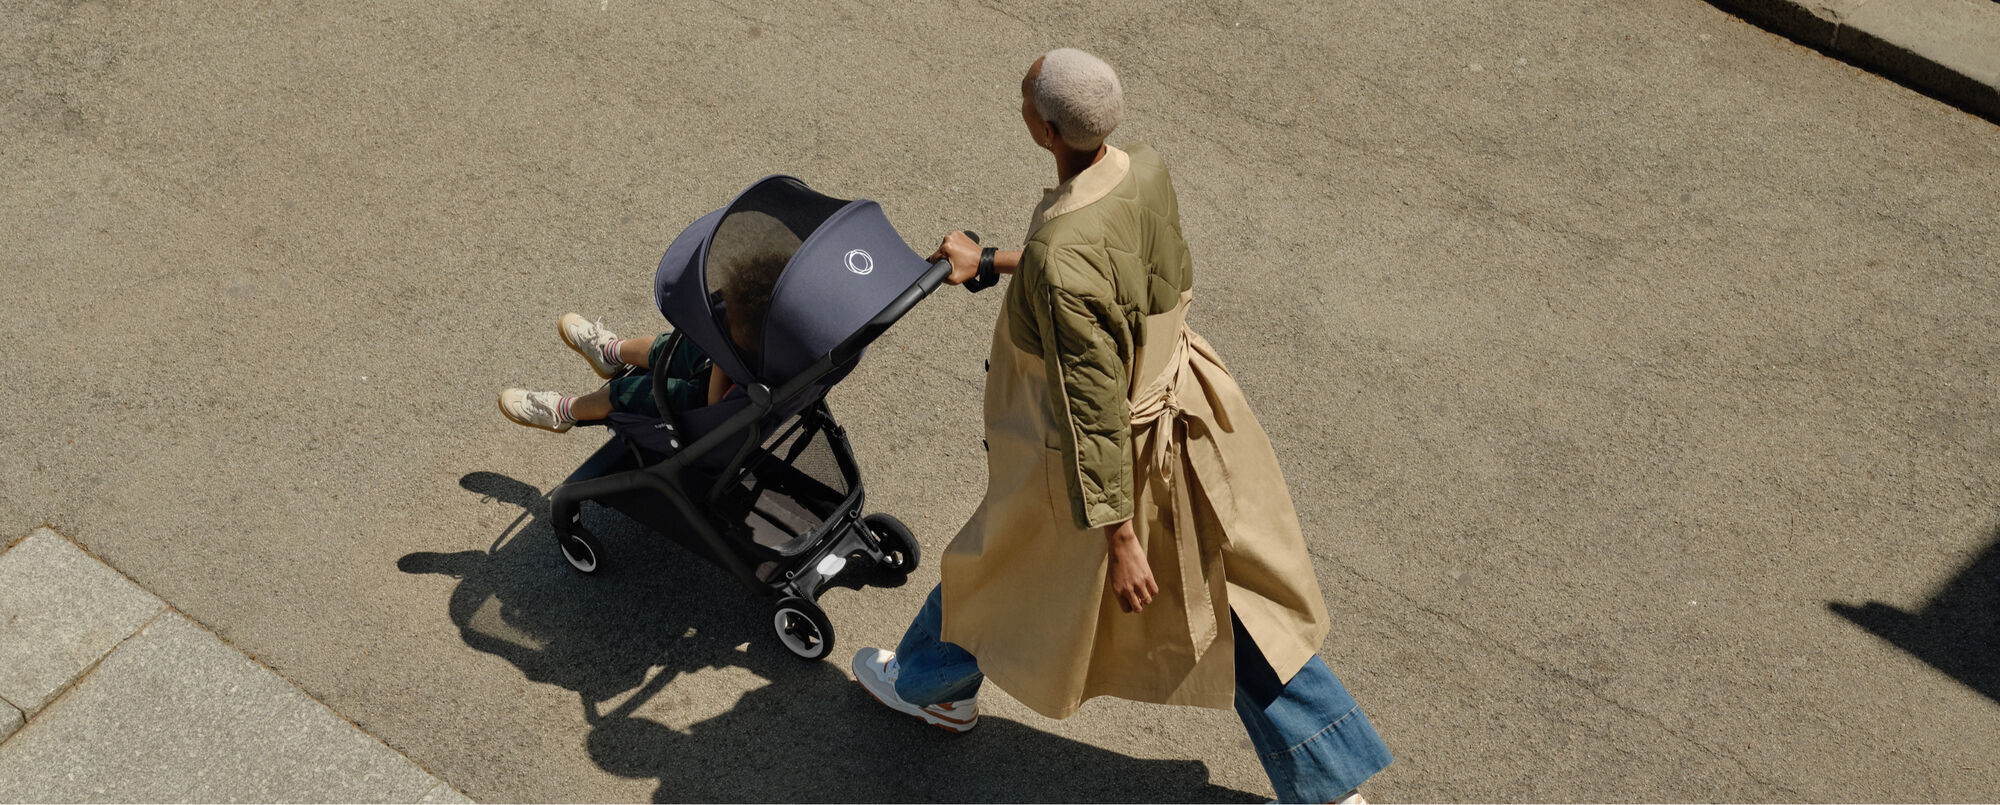 Una mamá con estilo paseando con su carrito Bugaboo por la calle.	 	 	